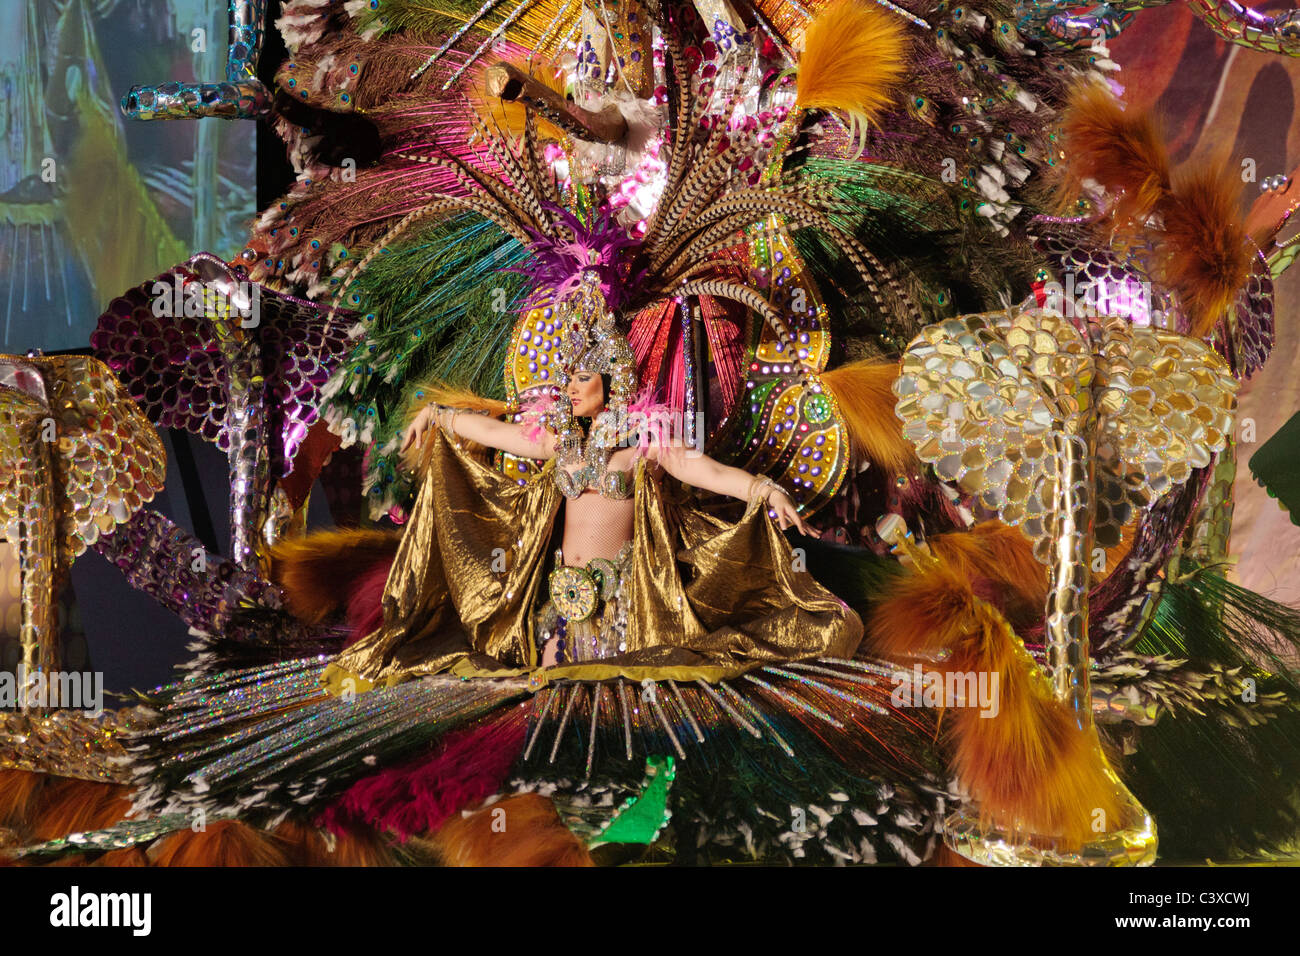 Carnaval santa cruz tenerife hi-res stock photography and images - Alamy